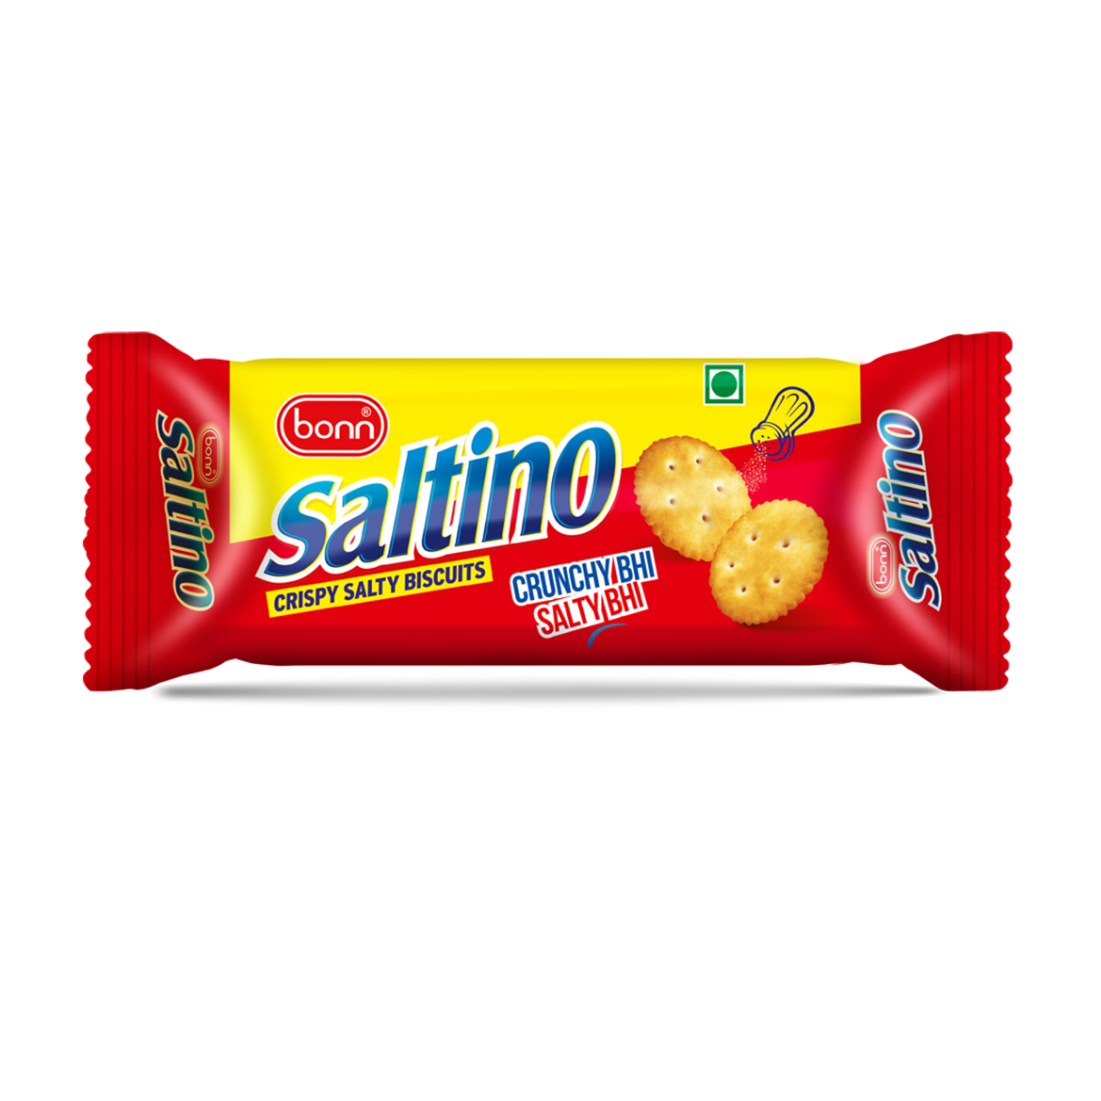 Bonn Saltino Biscuits